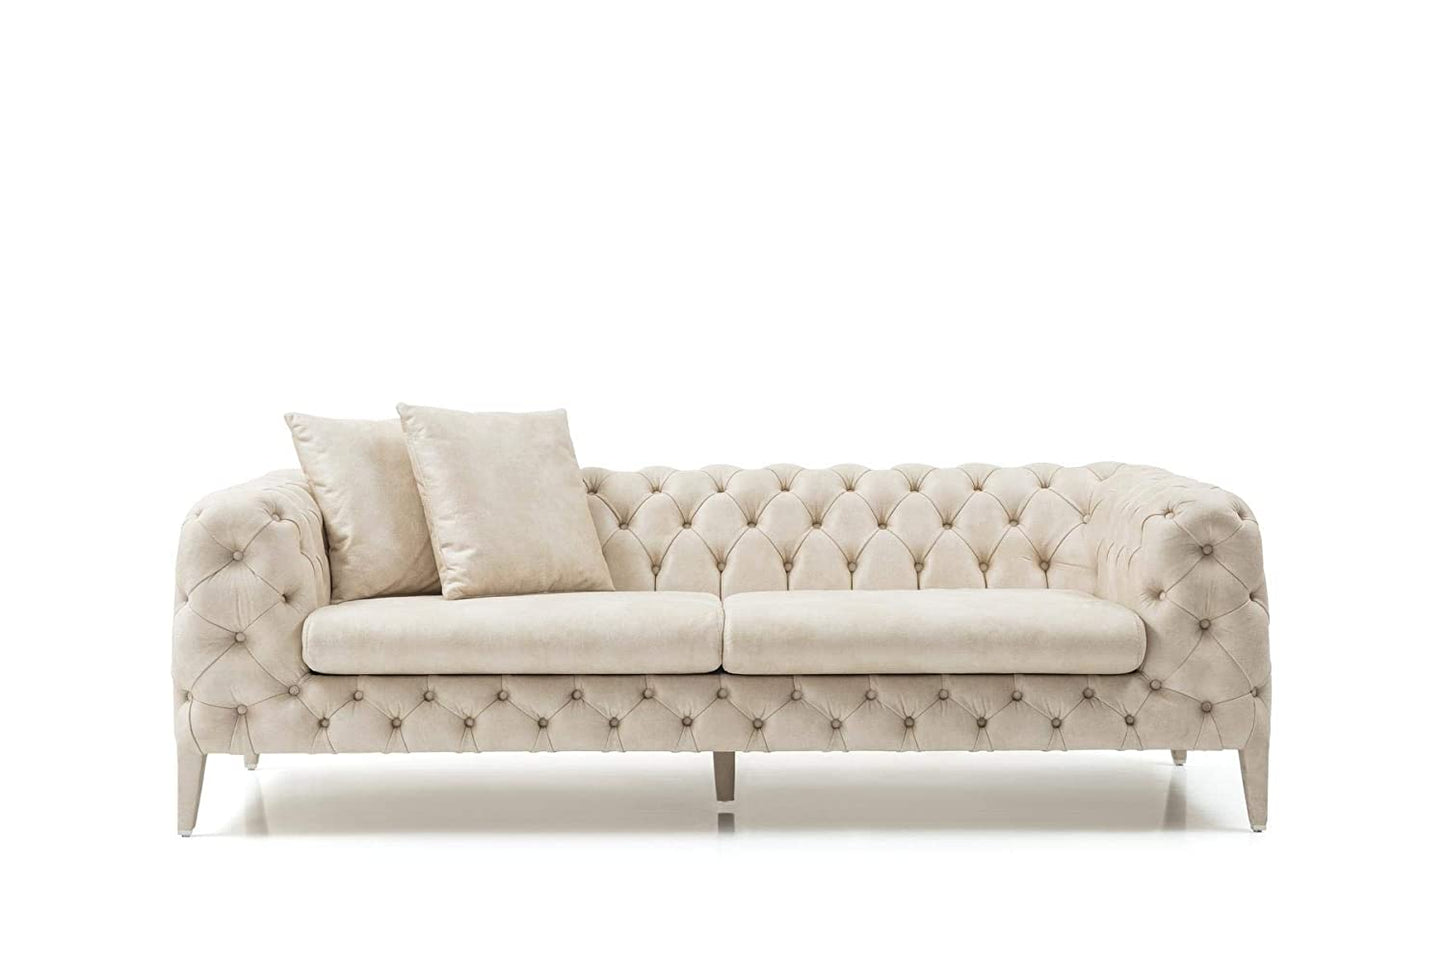 Designer Sofa Set:- 2+2+1 Wing Chair 5 Seater Luxury Furniture Sofa Set (Grey & Cream)